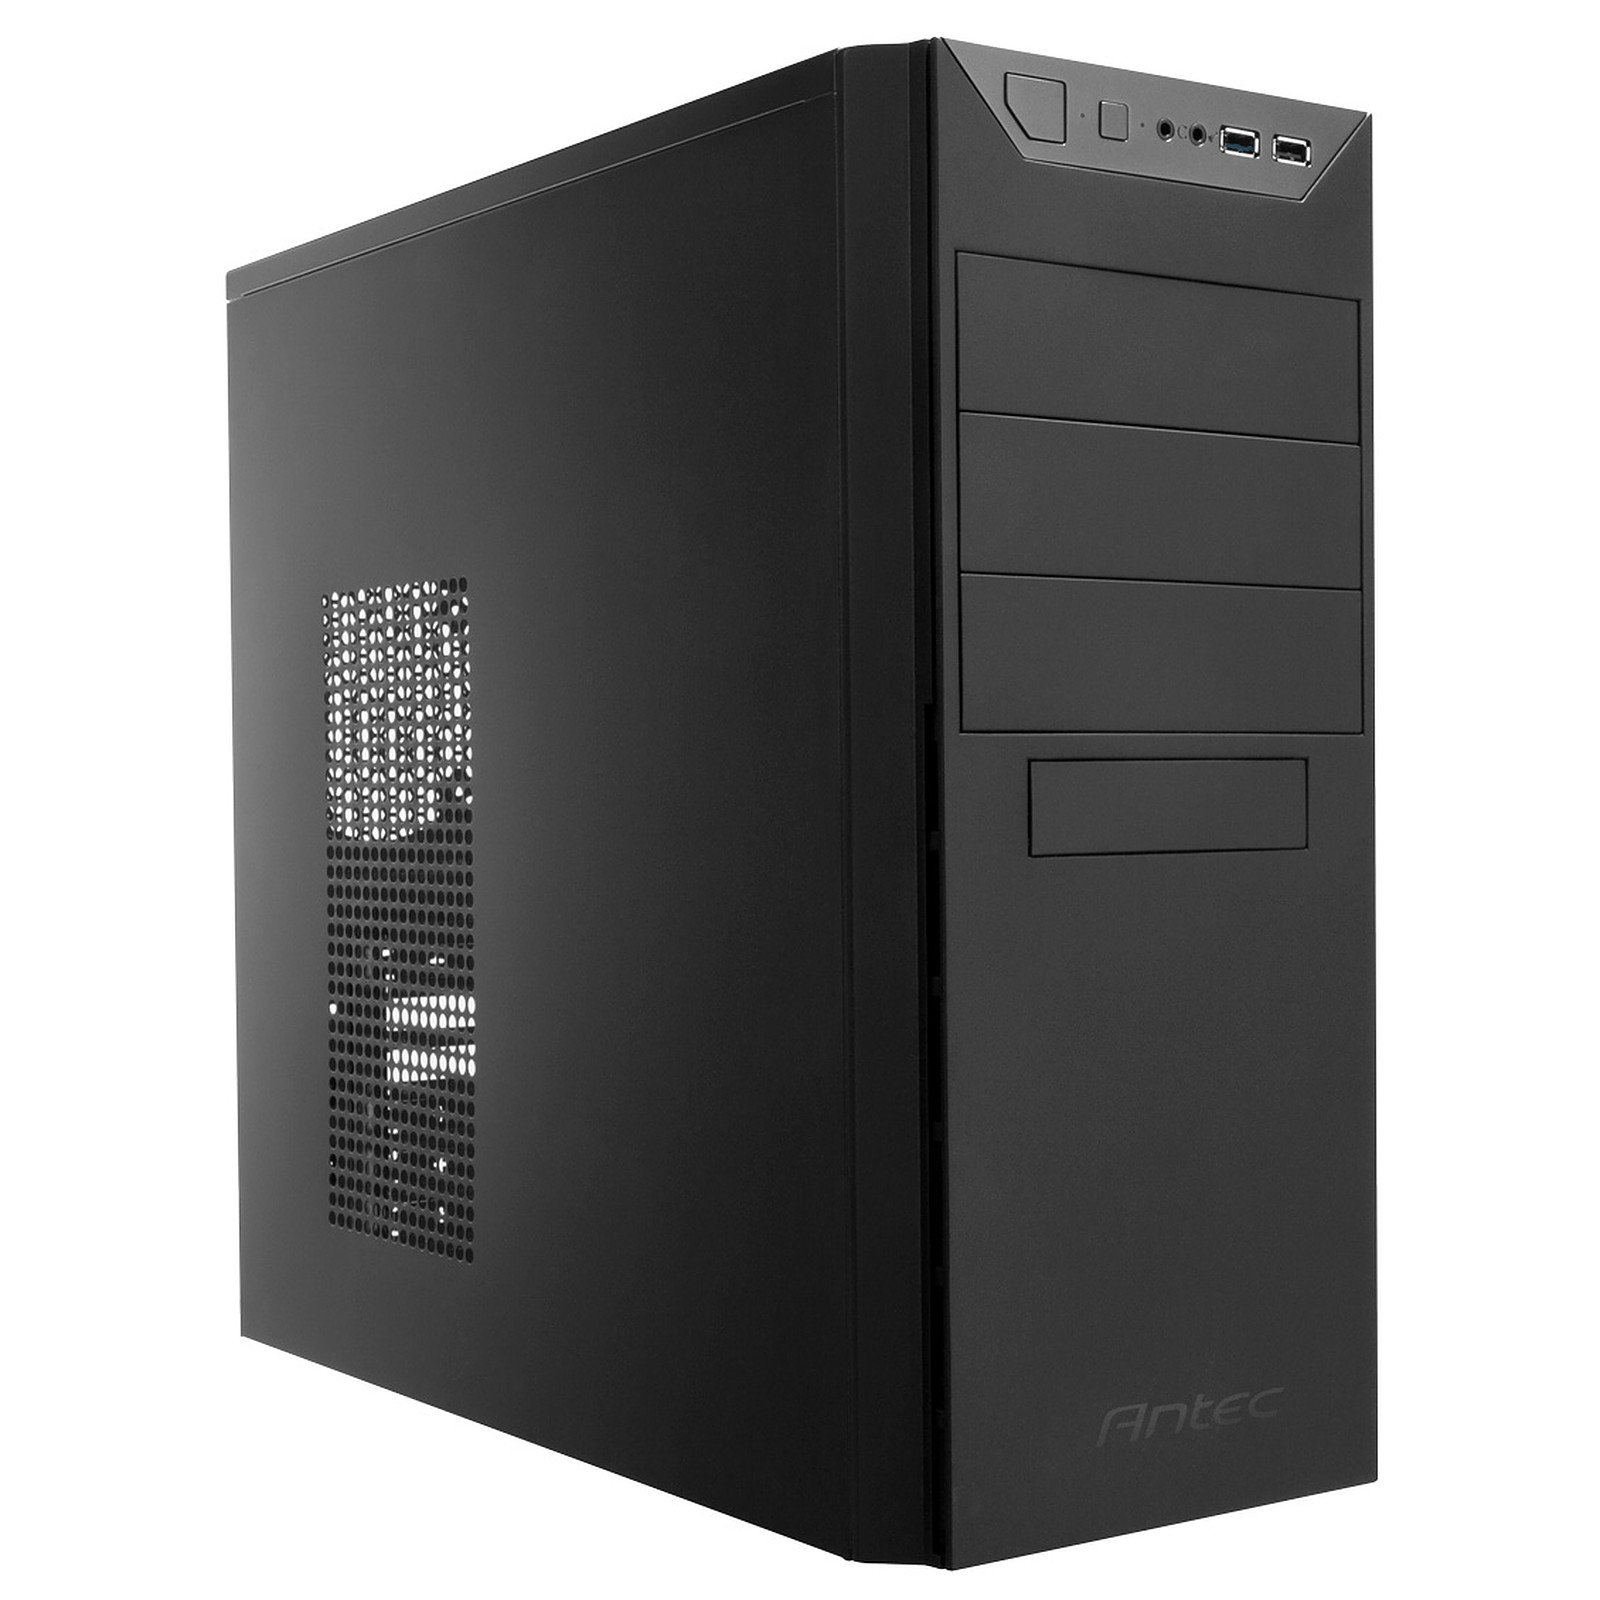 Boitier PC ATX, Micro-ATX, Mini-ITX Antec VSK-4000B-U3/U2 mini tour noir sans alim, informatique ile de la Runion 974